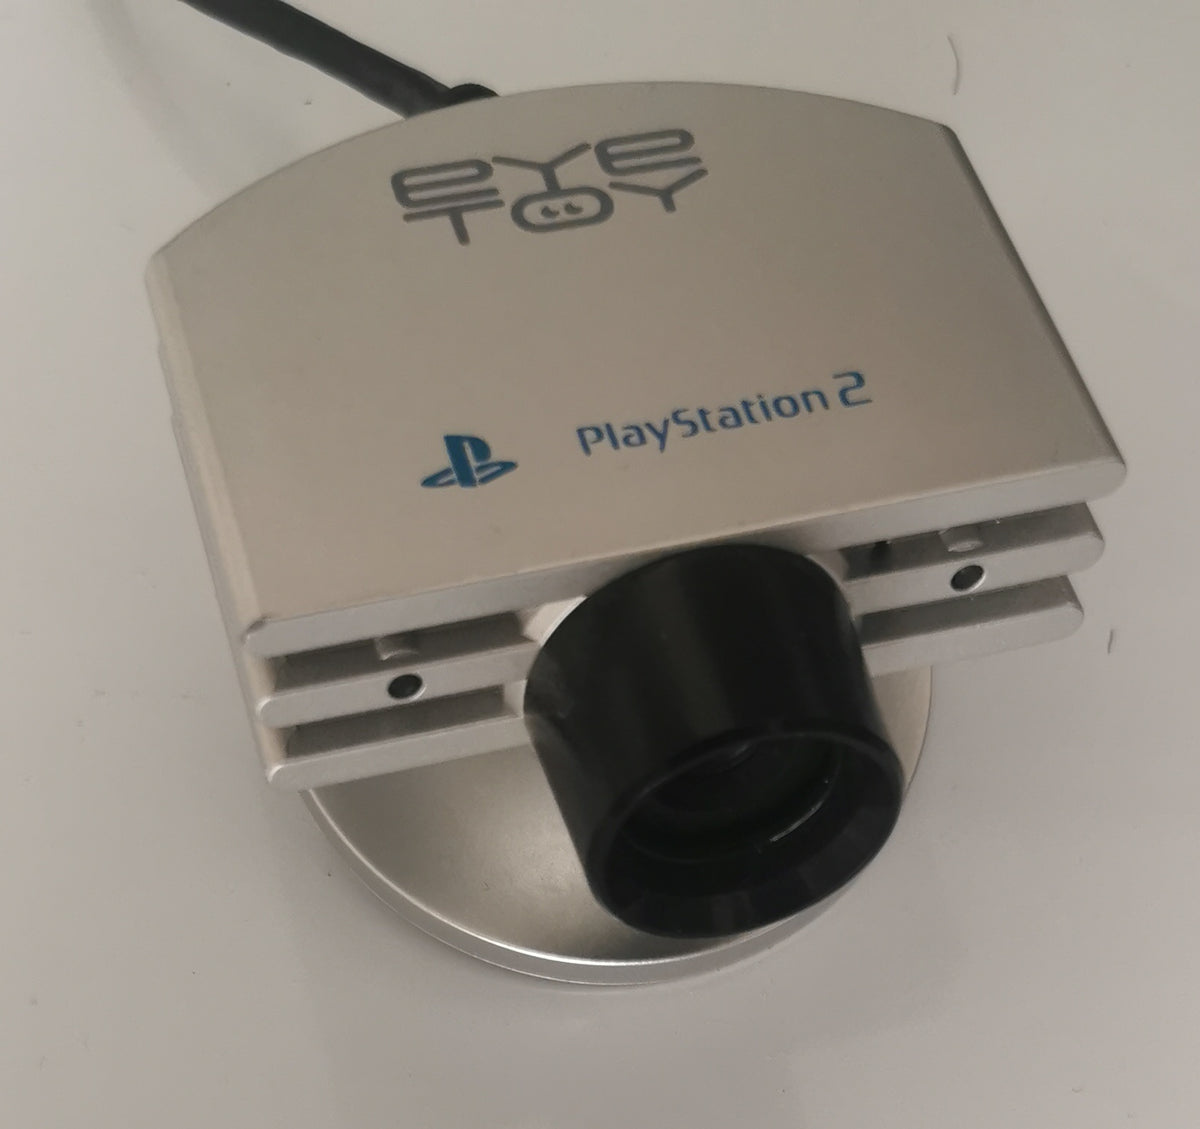 Offizielle EyeToy Kamera (Playstation 2) [Gut]